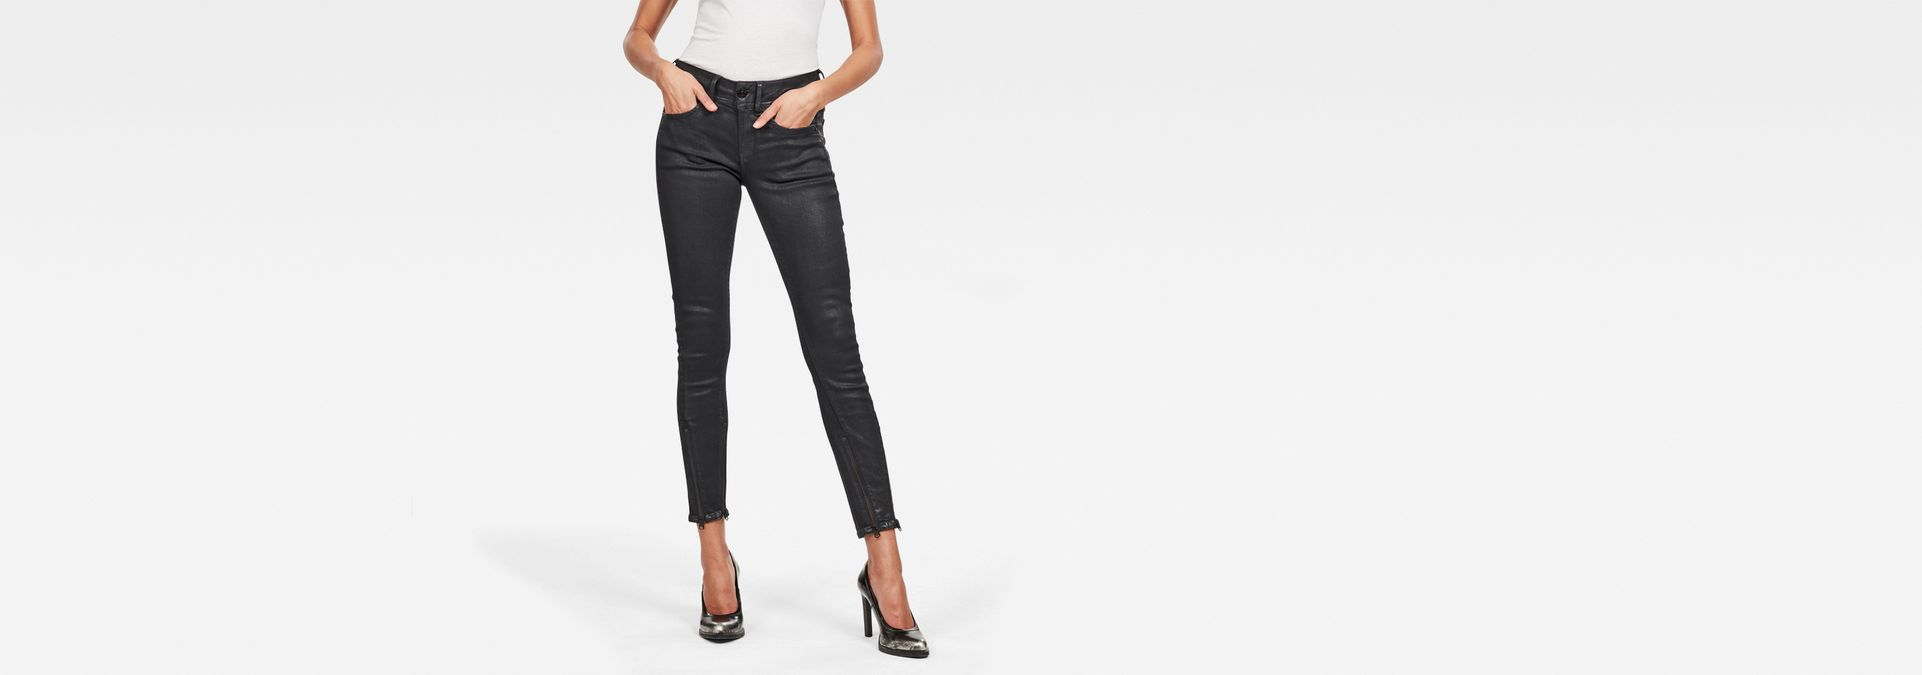 G-Star Lynn Pl Zip Ak Skinny Wmn New Women's Jeans Trousers New Leggings Black 